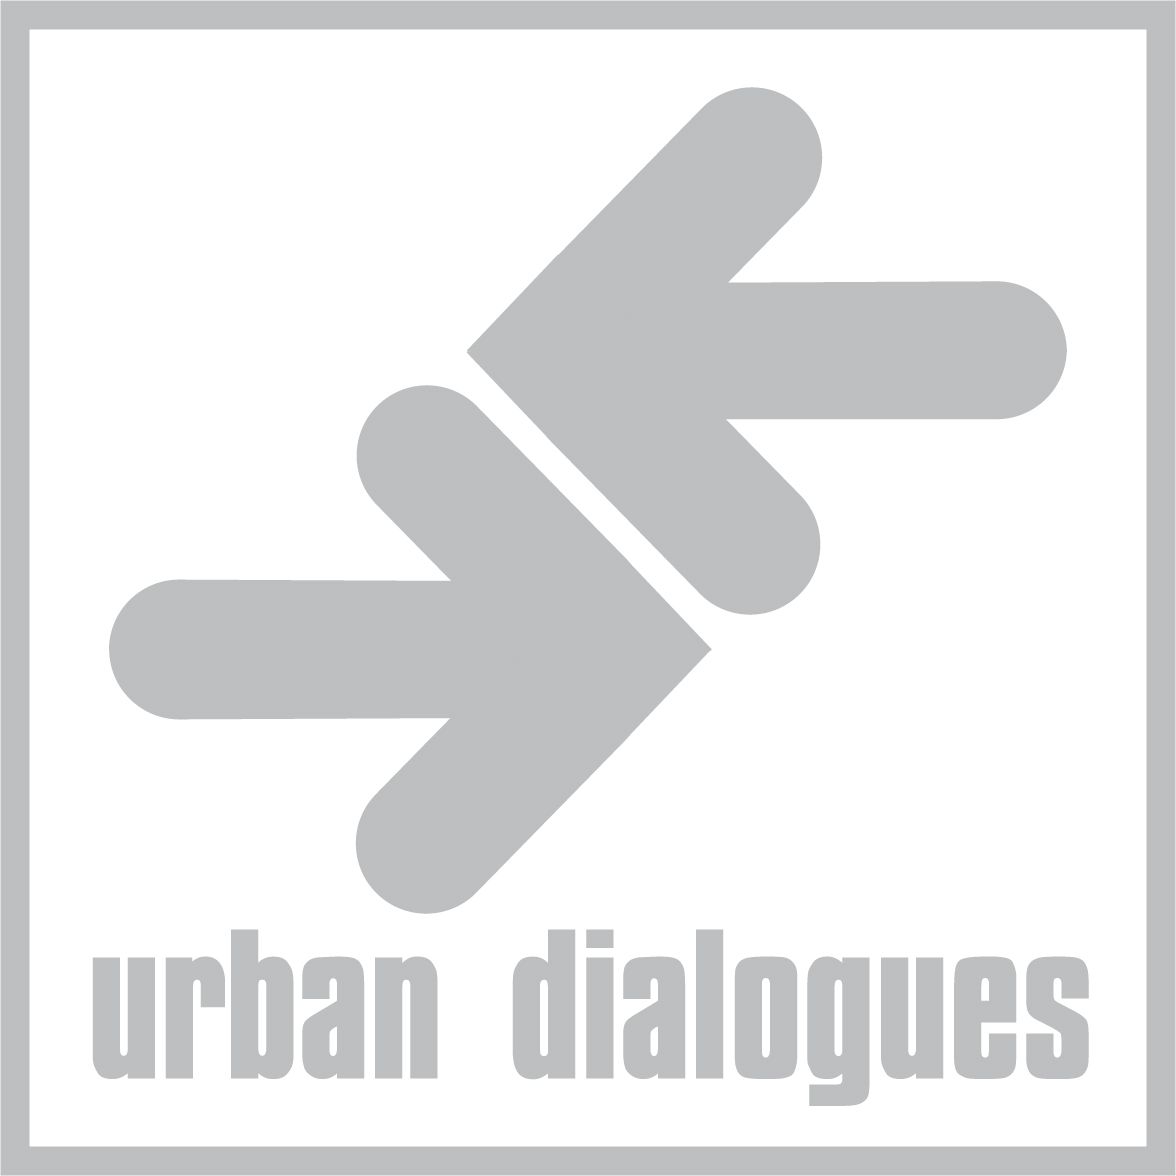 logo urban dialogues_web